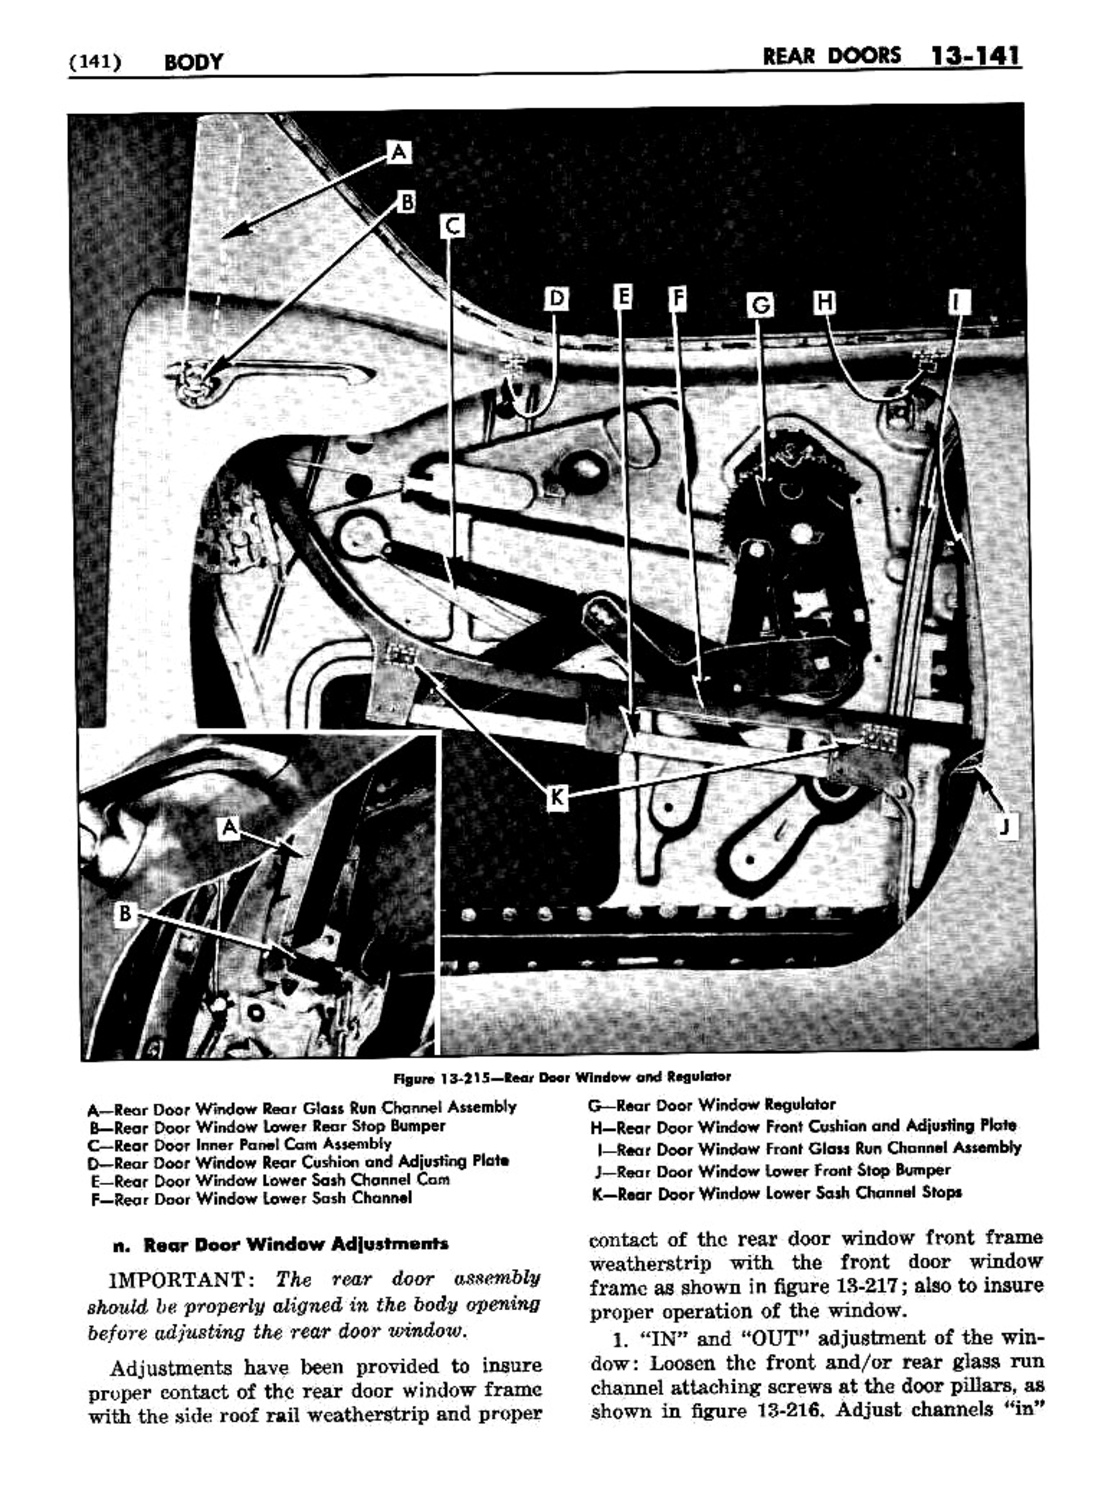 n_1957 Buick Body Service Manual-143-143.jpg